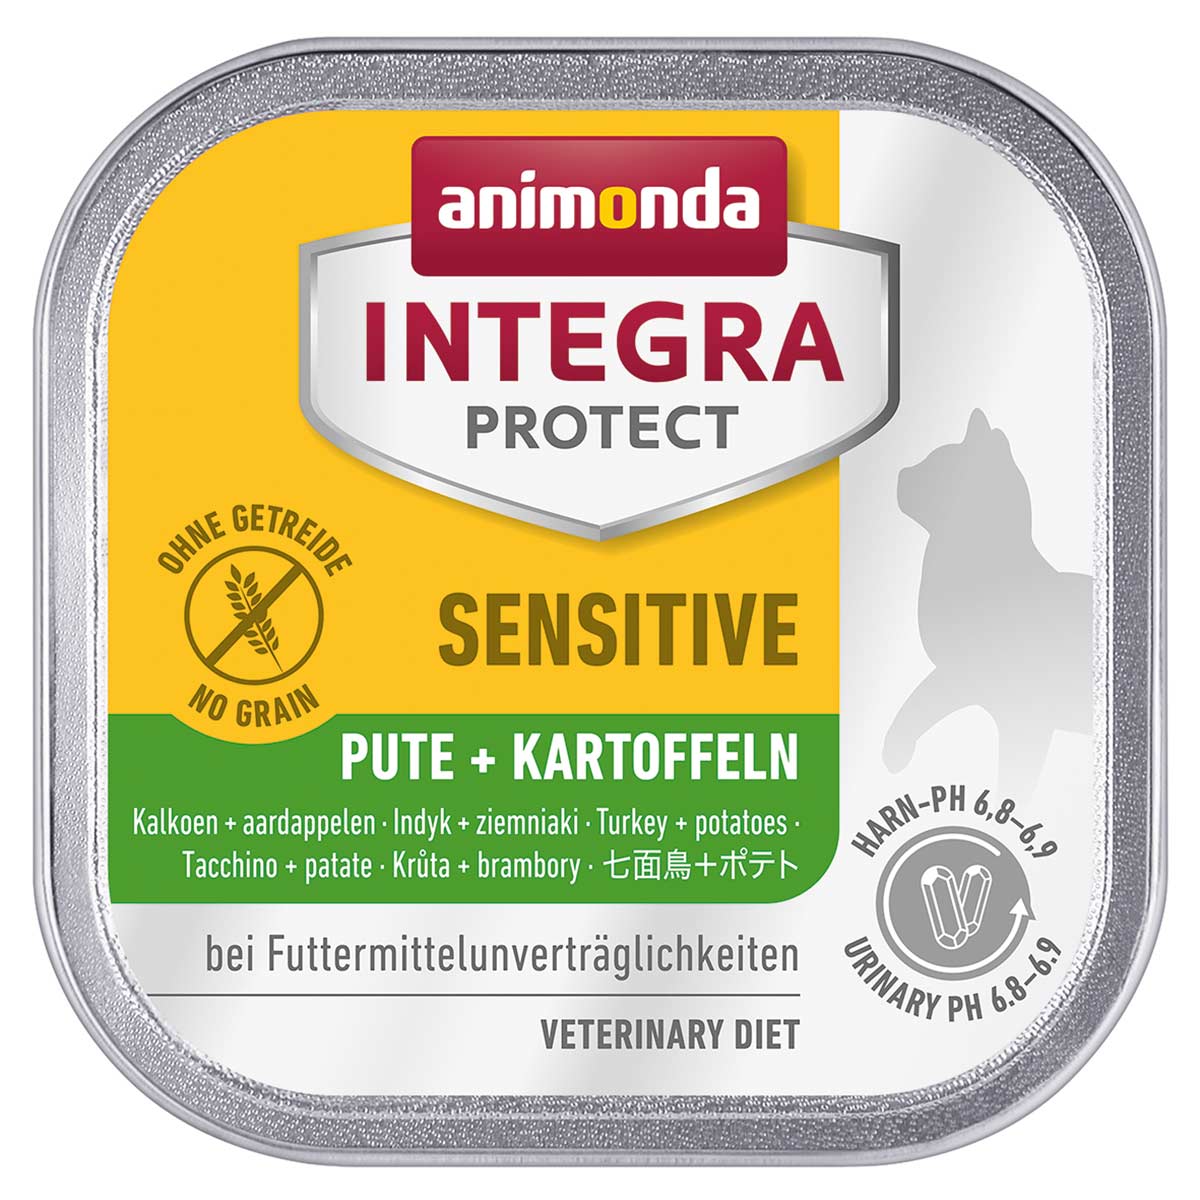 animonda INTEGRA PROTECT Sensitive Pute und Kartoffeln 6x100g von animonda Integra Protect